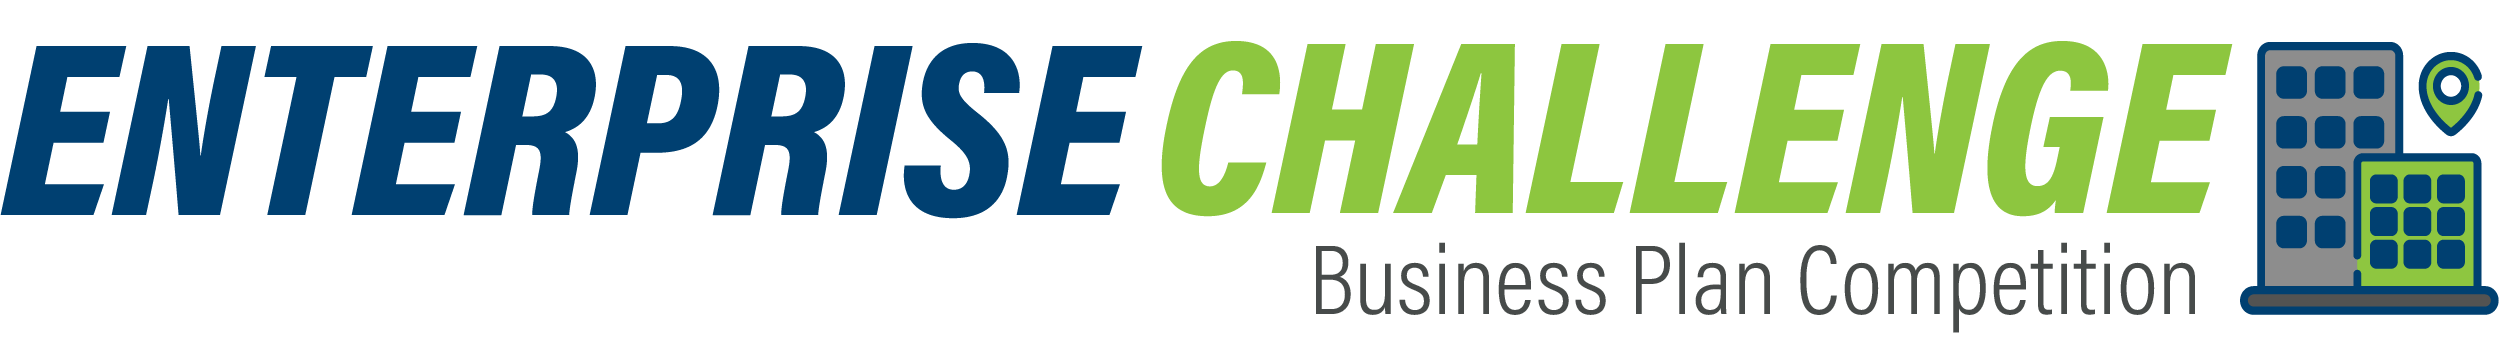 2021 Enterprise Challenge Logo - Horizontal